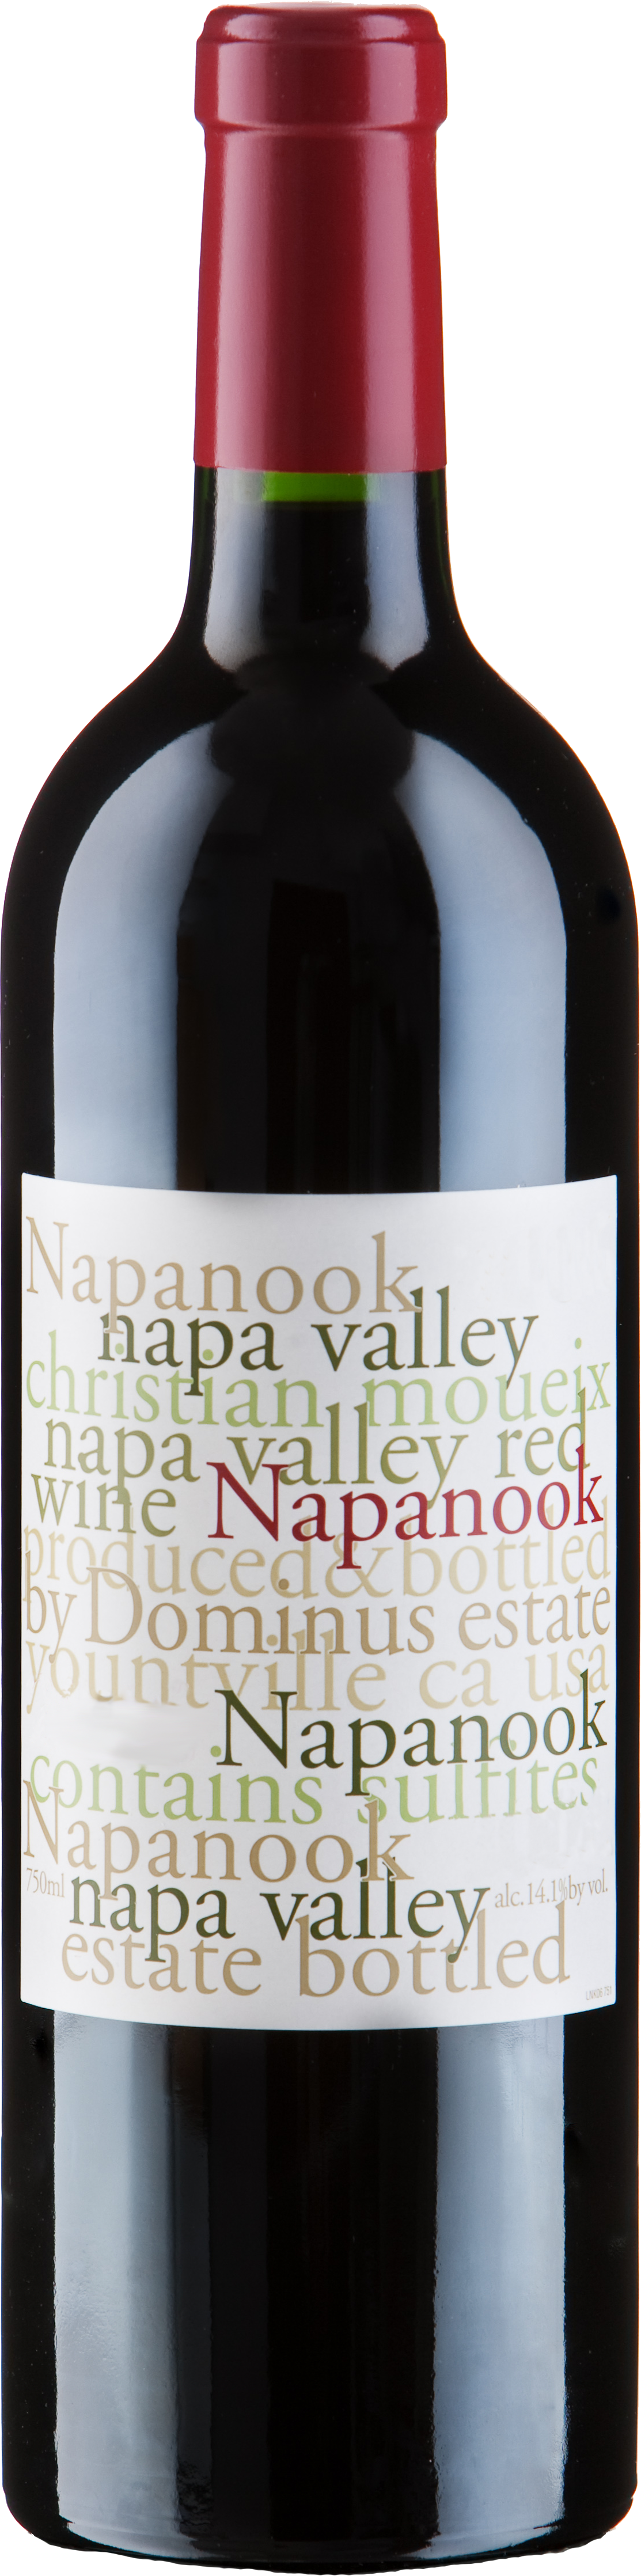 Bottle shot of 2006 Napanook